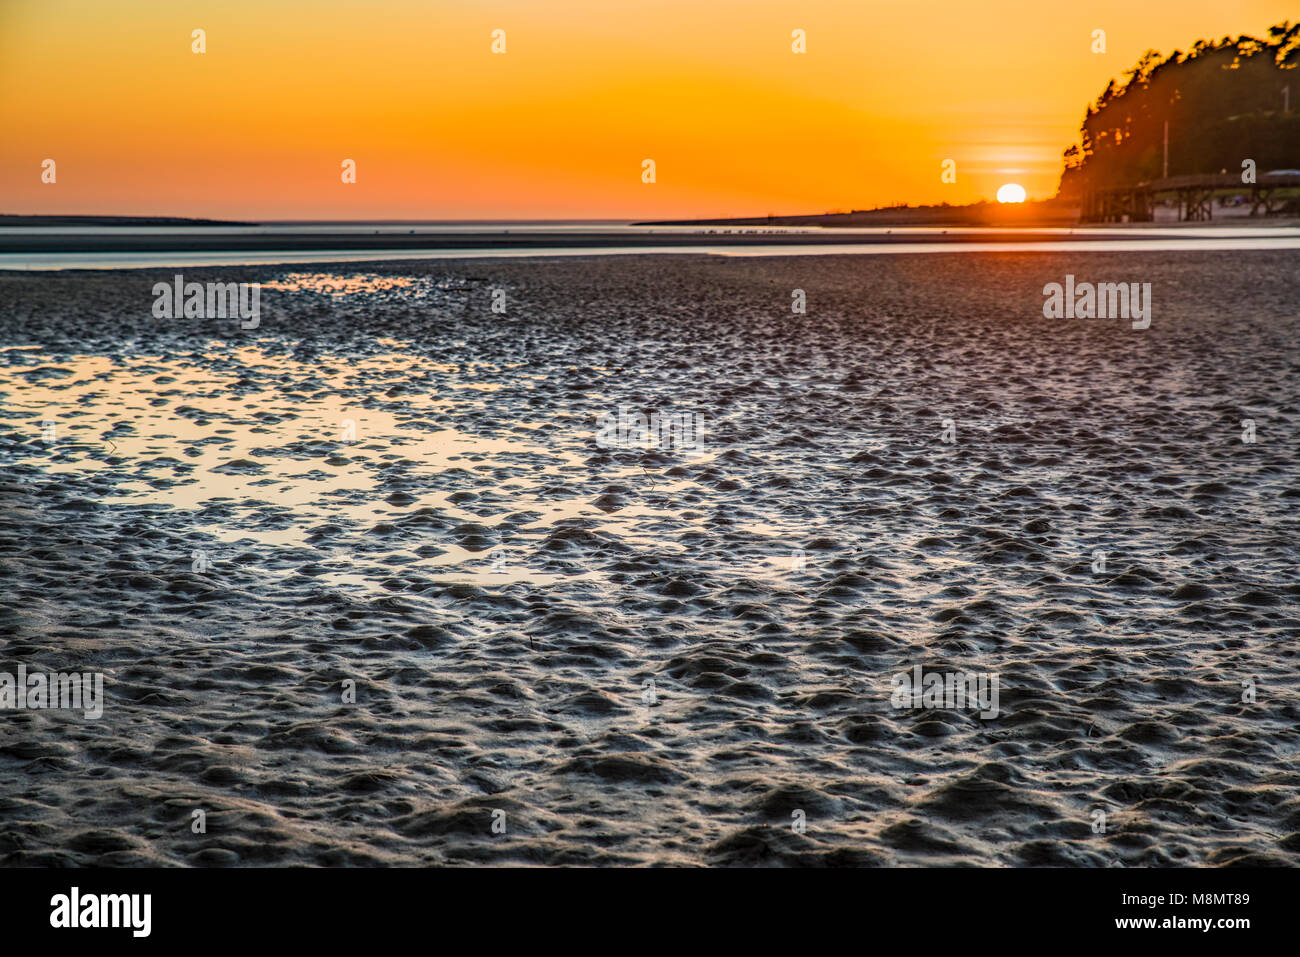 Mud flat in Siletz Bay at sunset showing sign of clams buried beneath.  Siletz Bay, Oregon Stock Photo